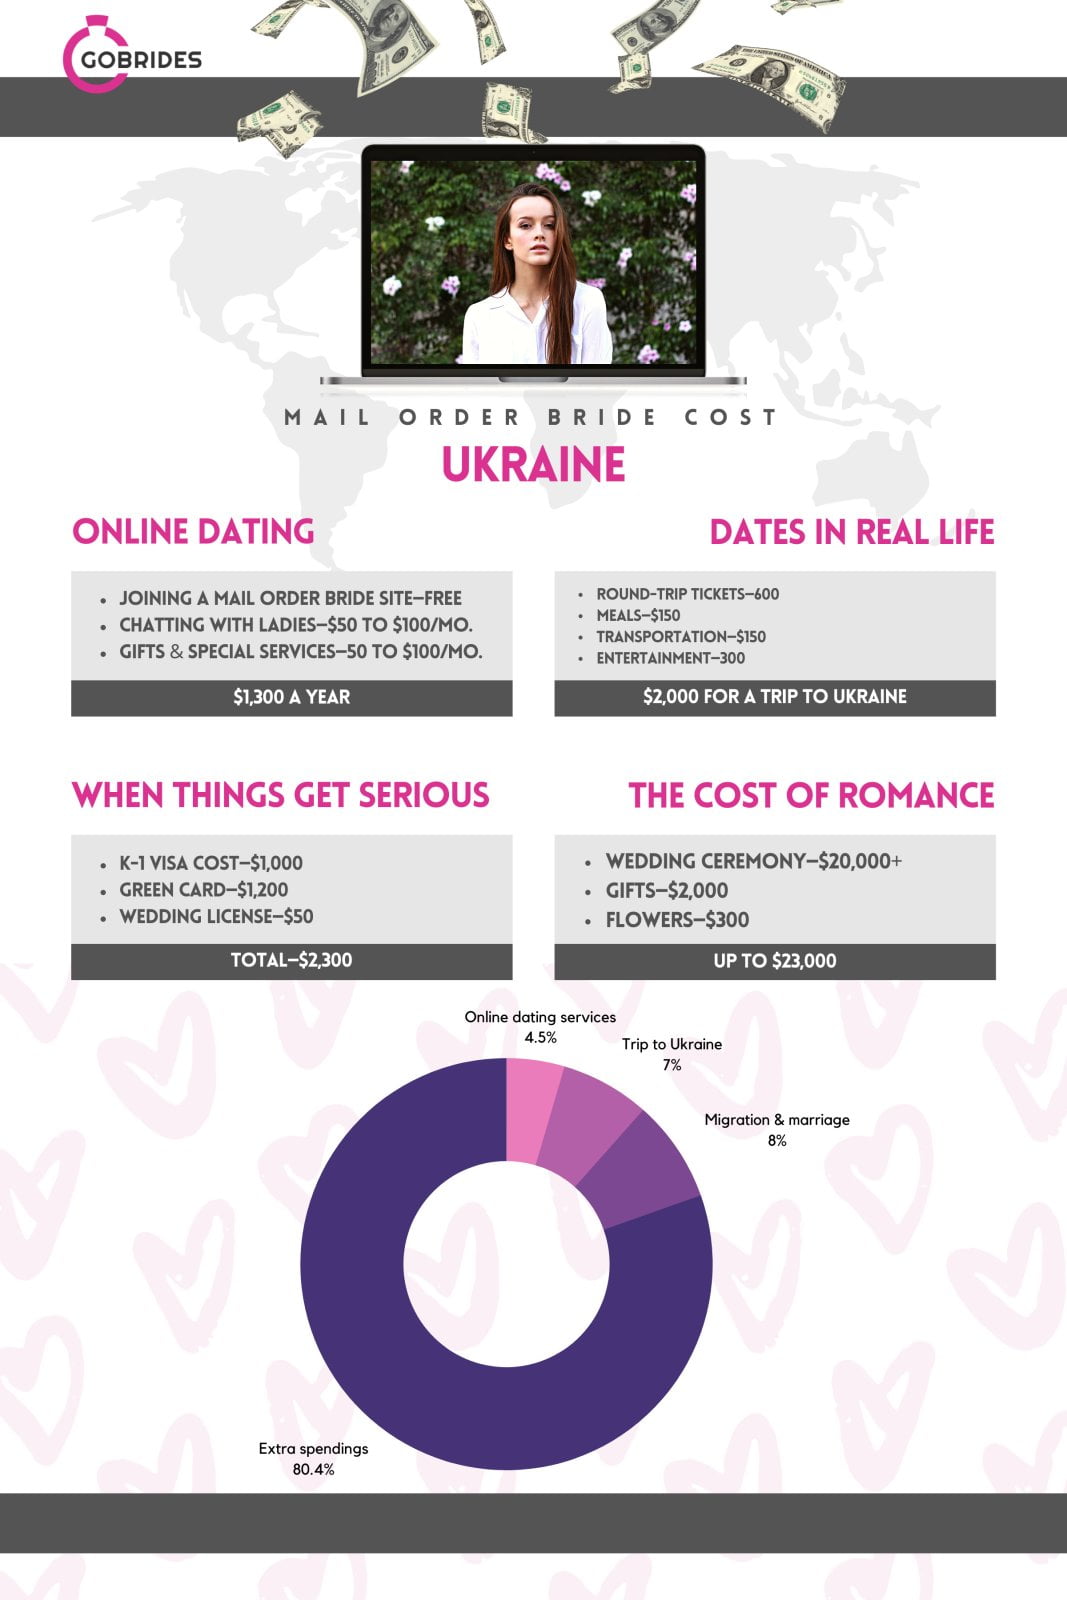 Ukrainian brides cost